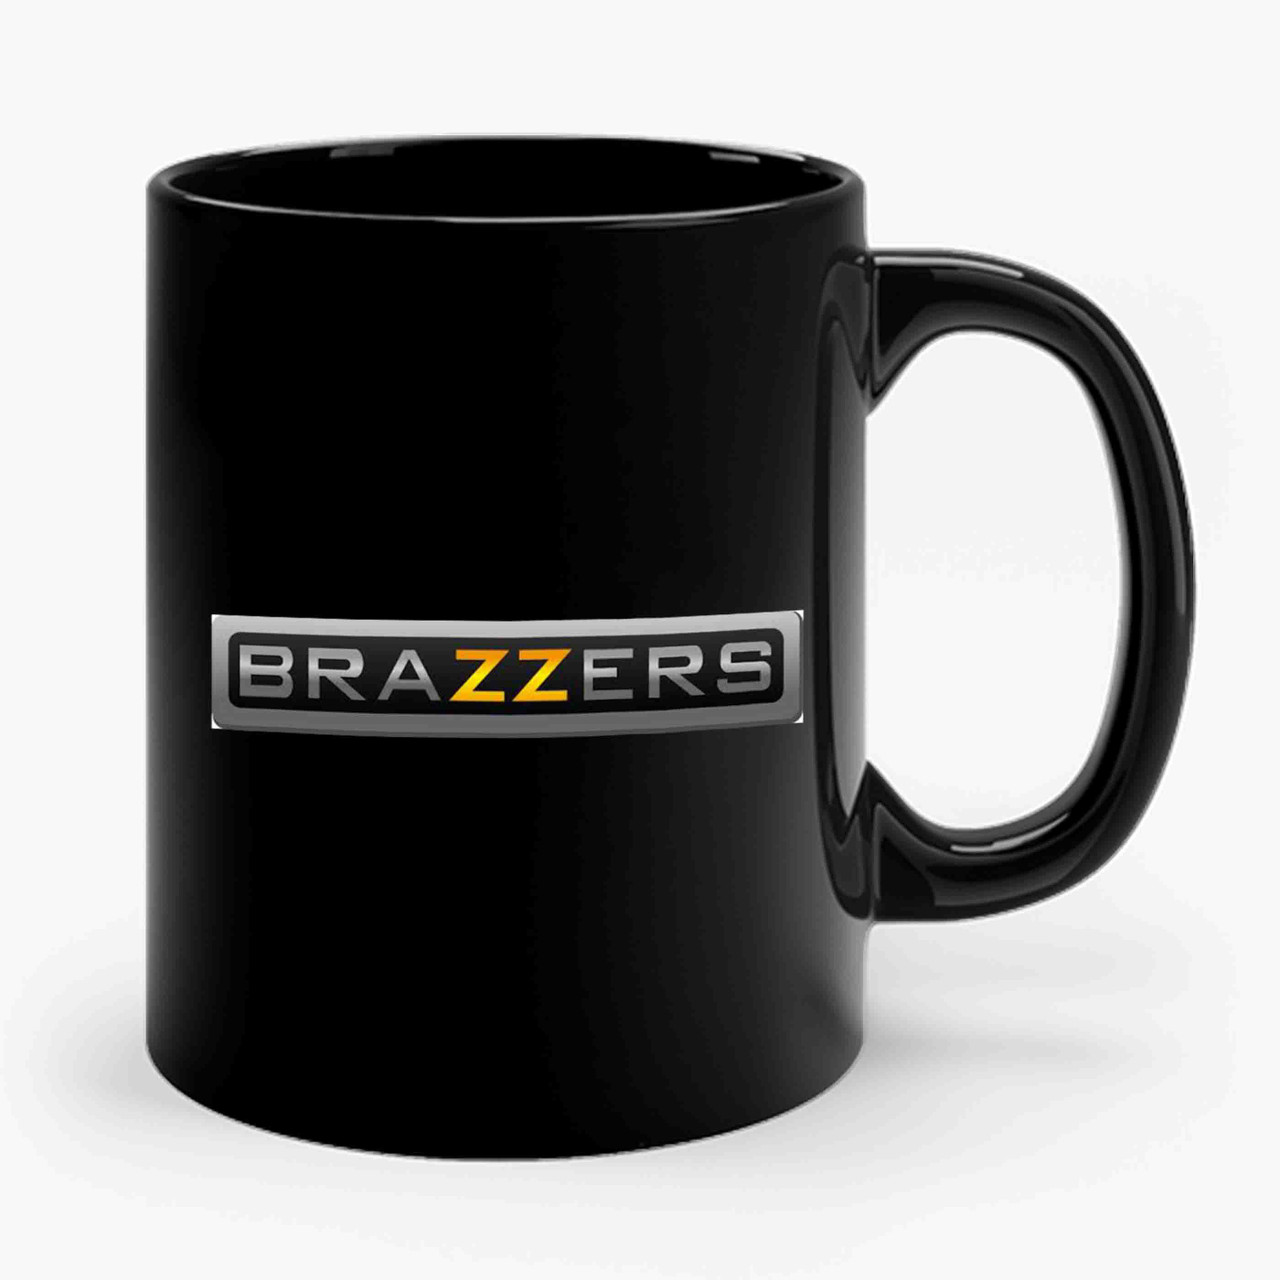 Xbrax C Com - Brazzers Funny Cool Porn Industry Ceramic Mug